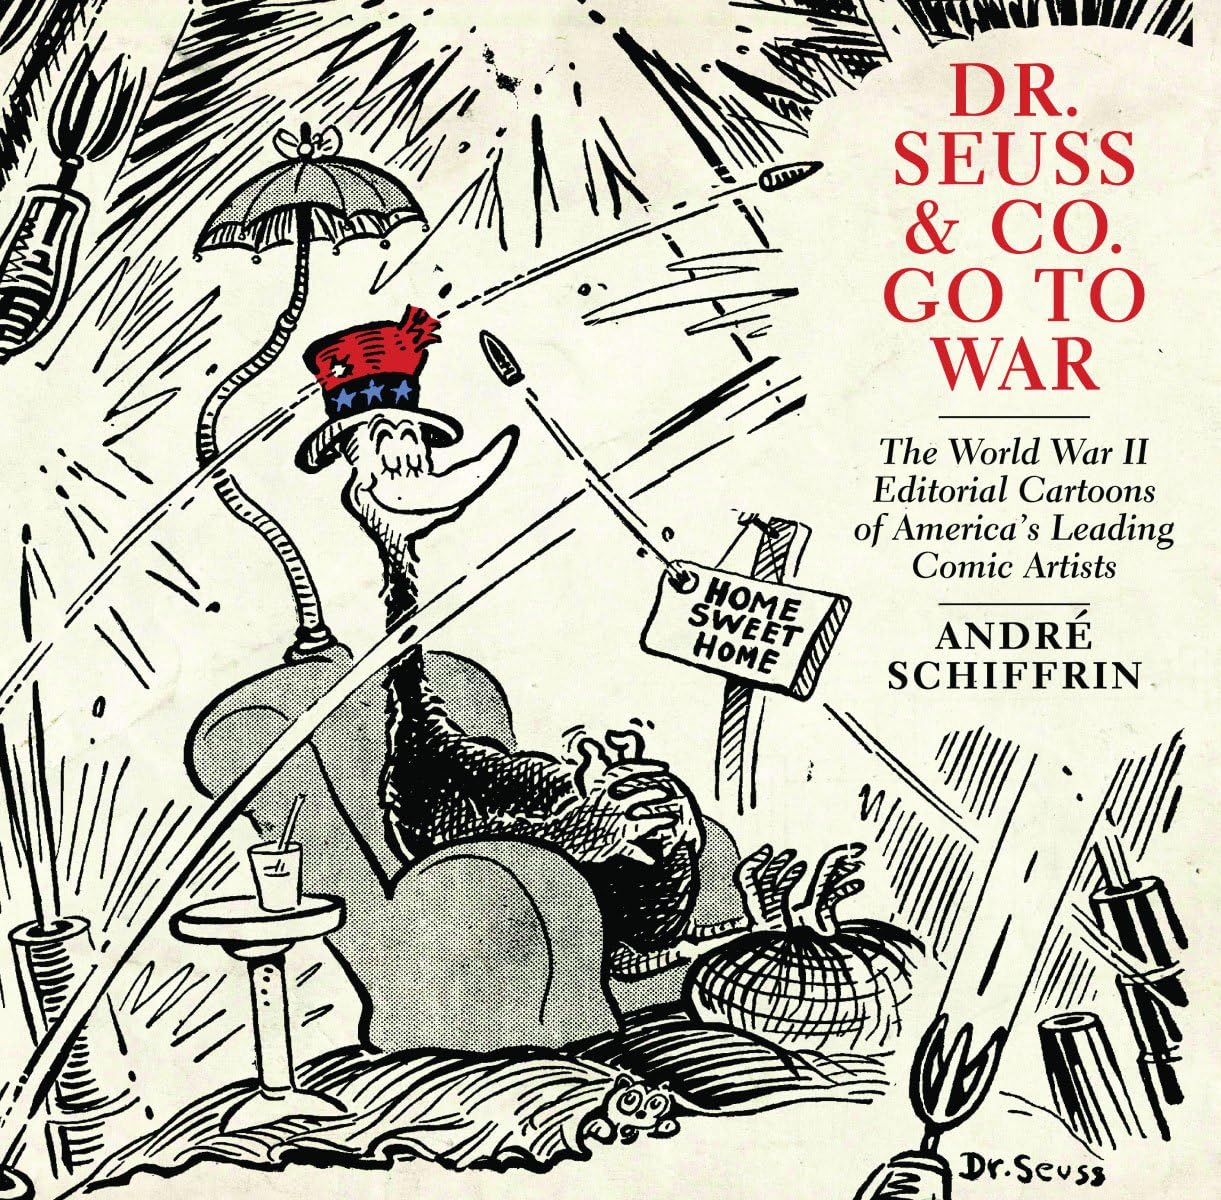 Dr. Seuss & Co. Go to War: The World War II Editorial Cartoons of Americas Leading Comic Artists